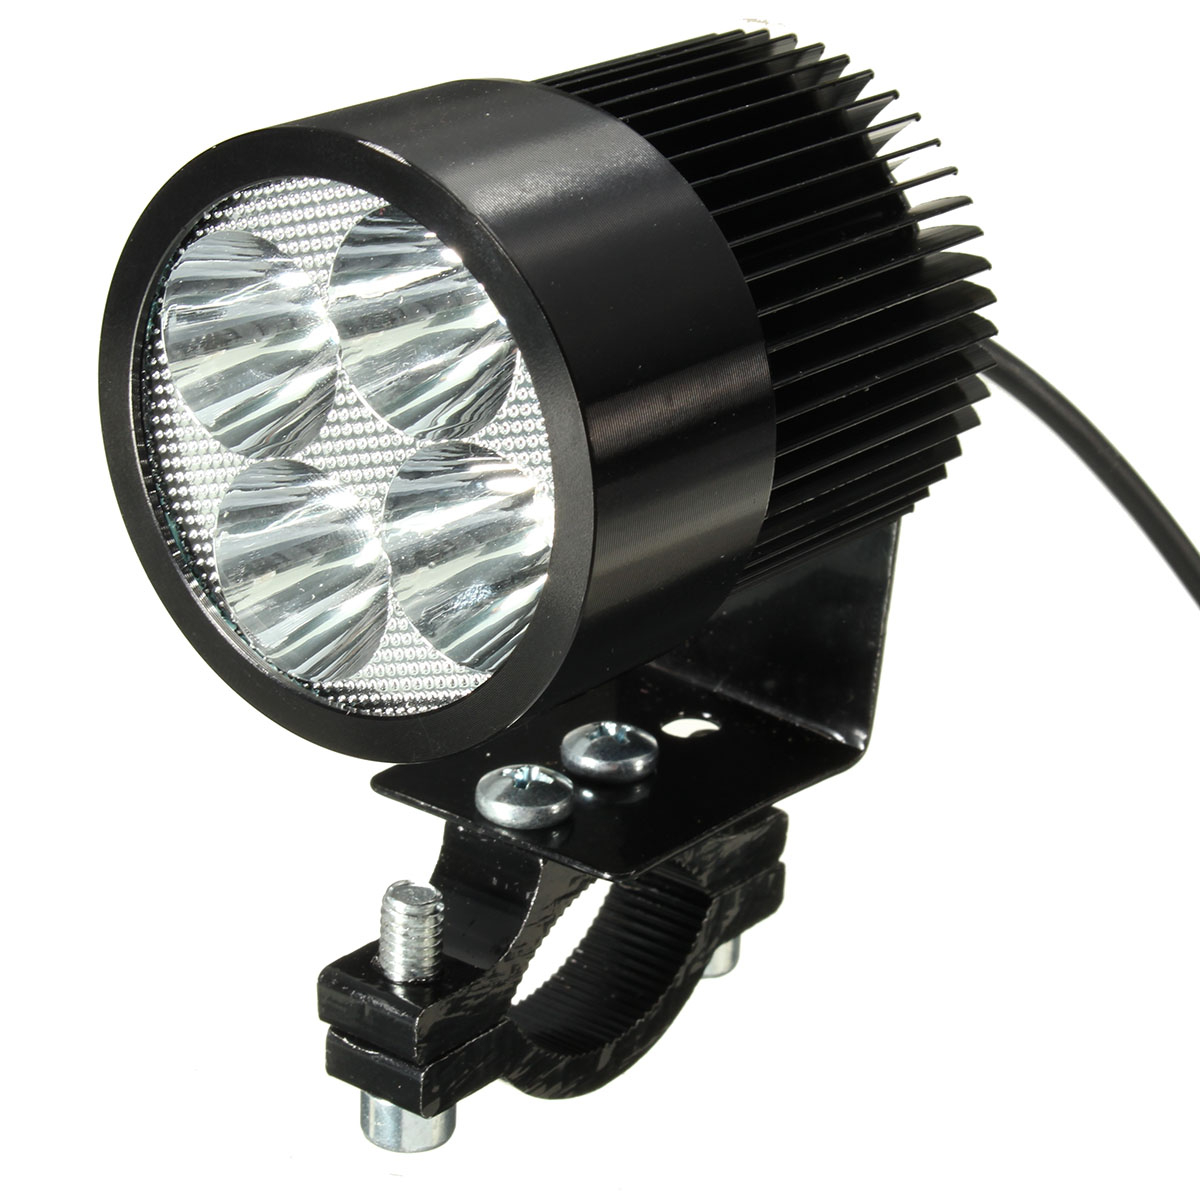 12V 12W 6000K LED Daylight Headlamp Spot Light for Motorcycle Scooter Car Truck Van - Auto GoShop